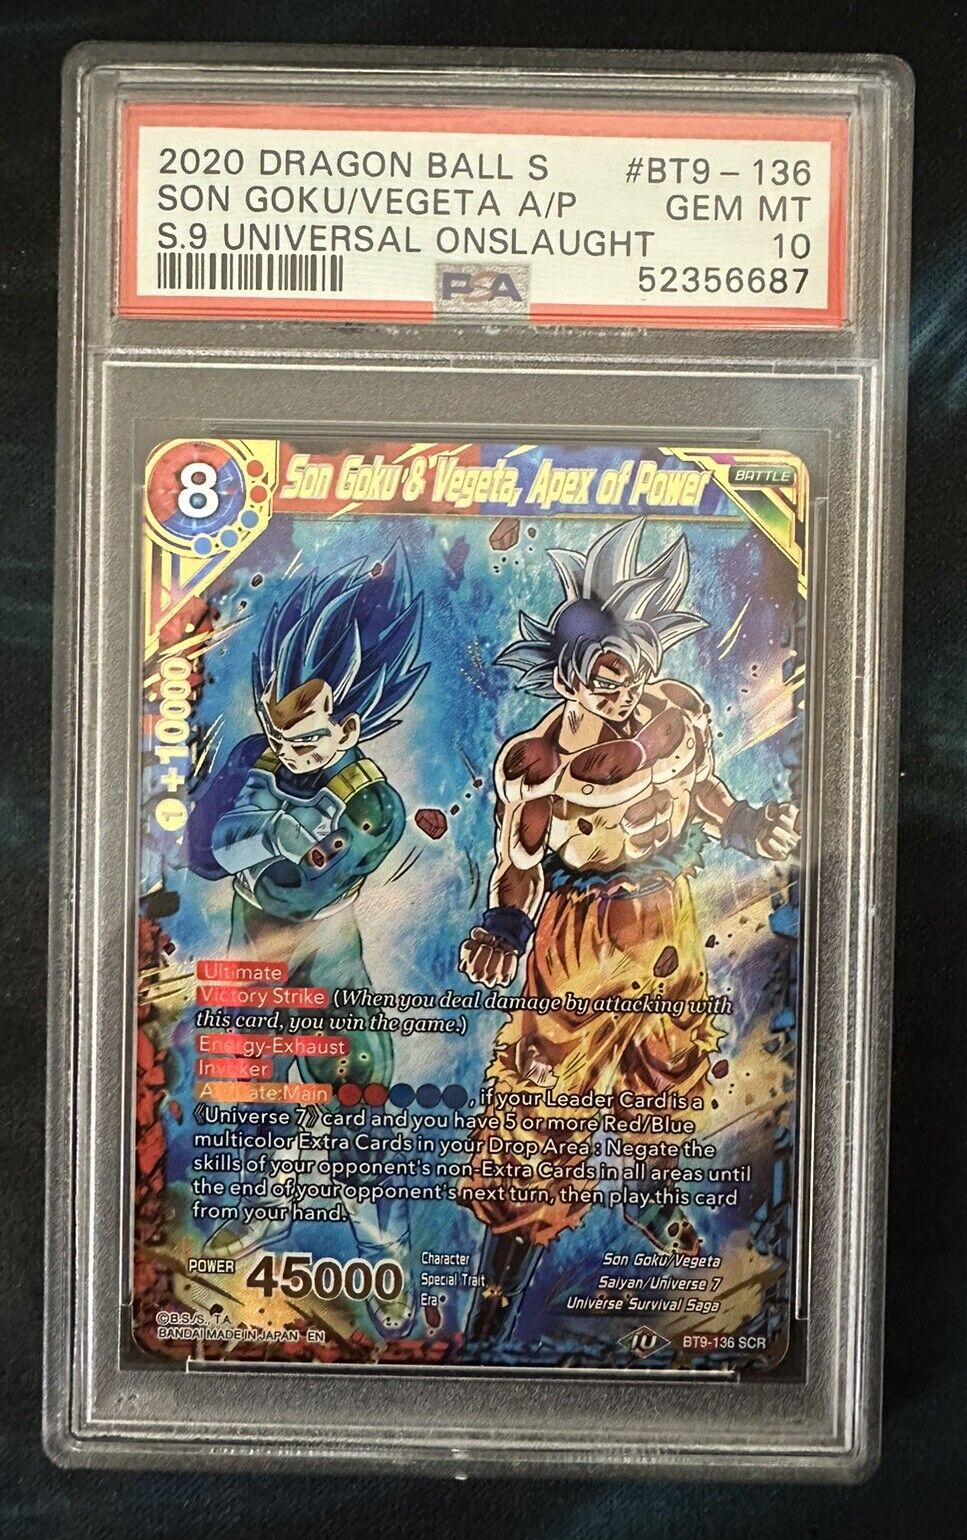 Son Goku & Vegeta, Apex Of Poeer BT9-136 SCR PSA 10 Gem Mint Universal Onslaught